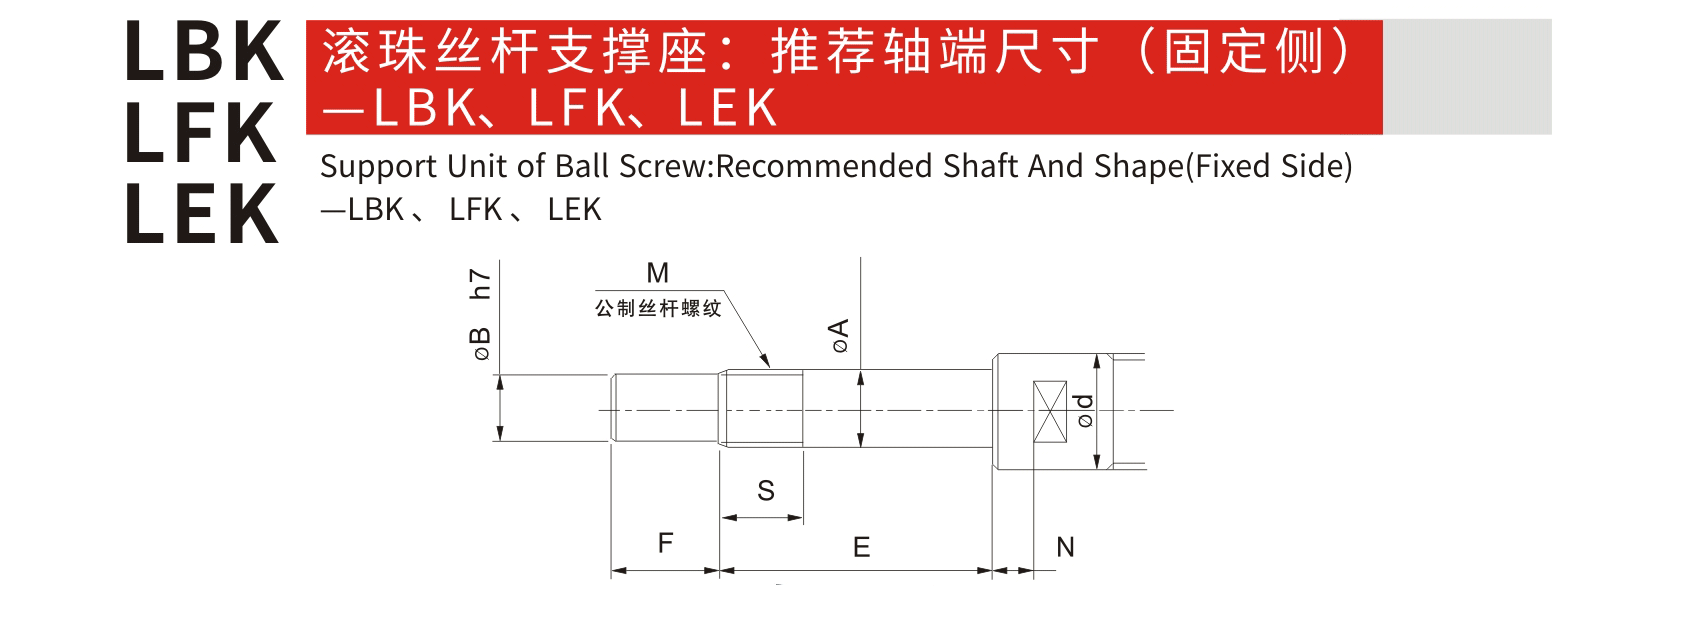 LFK 固定侧_联轴器种类-广州菱科自动化设备有限公司